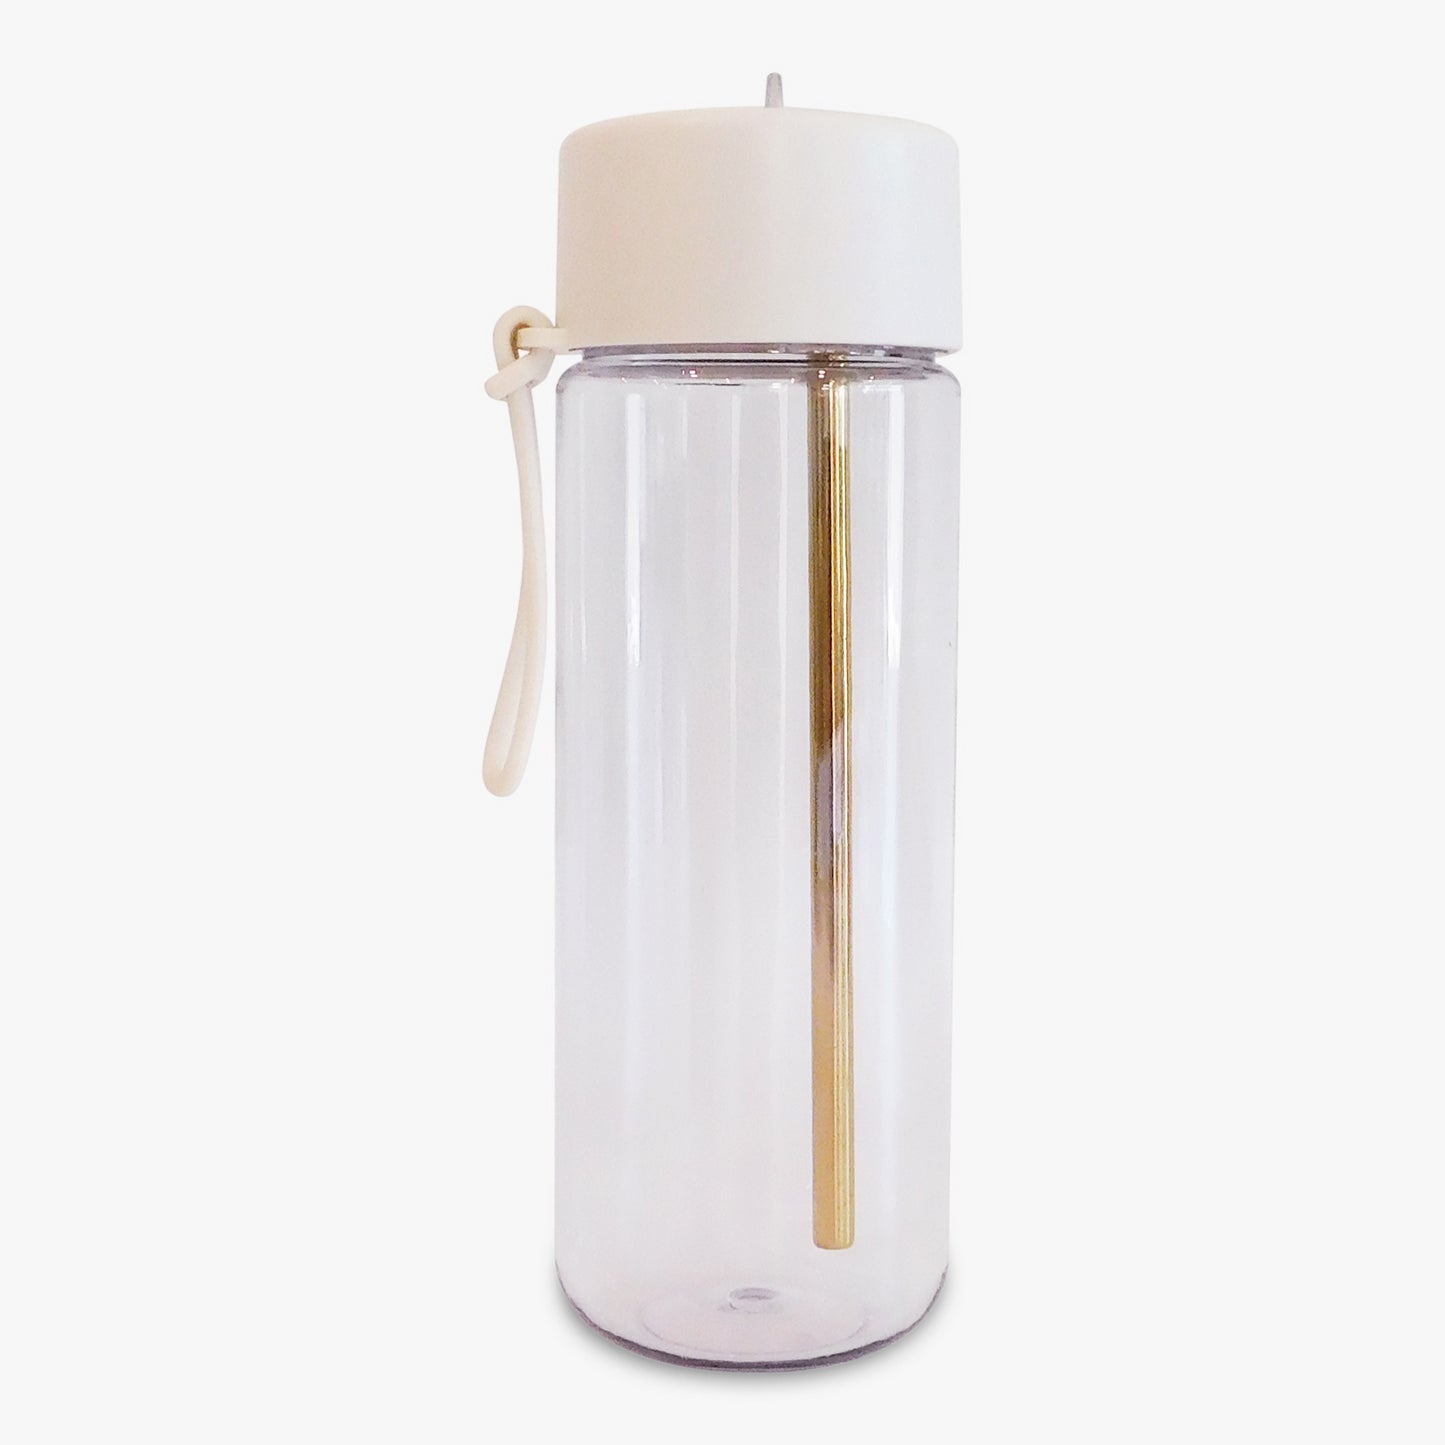 25oz Tritan Plastic Reusable Drink Bottle with Flip Straw Lid